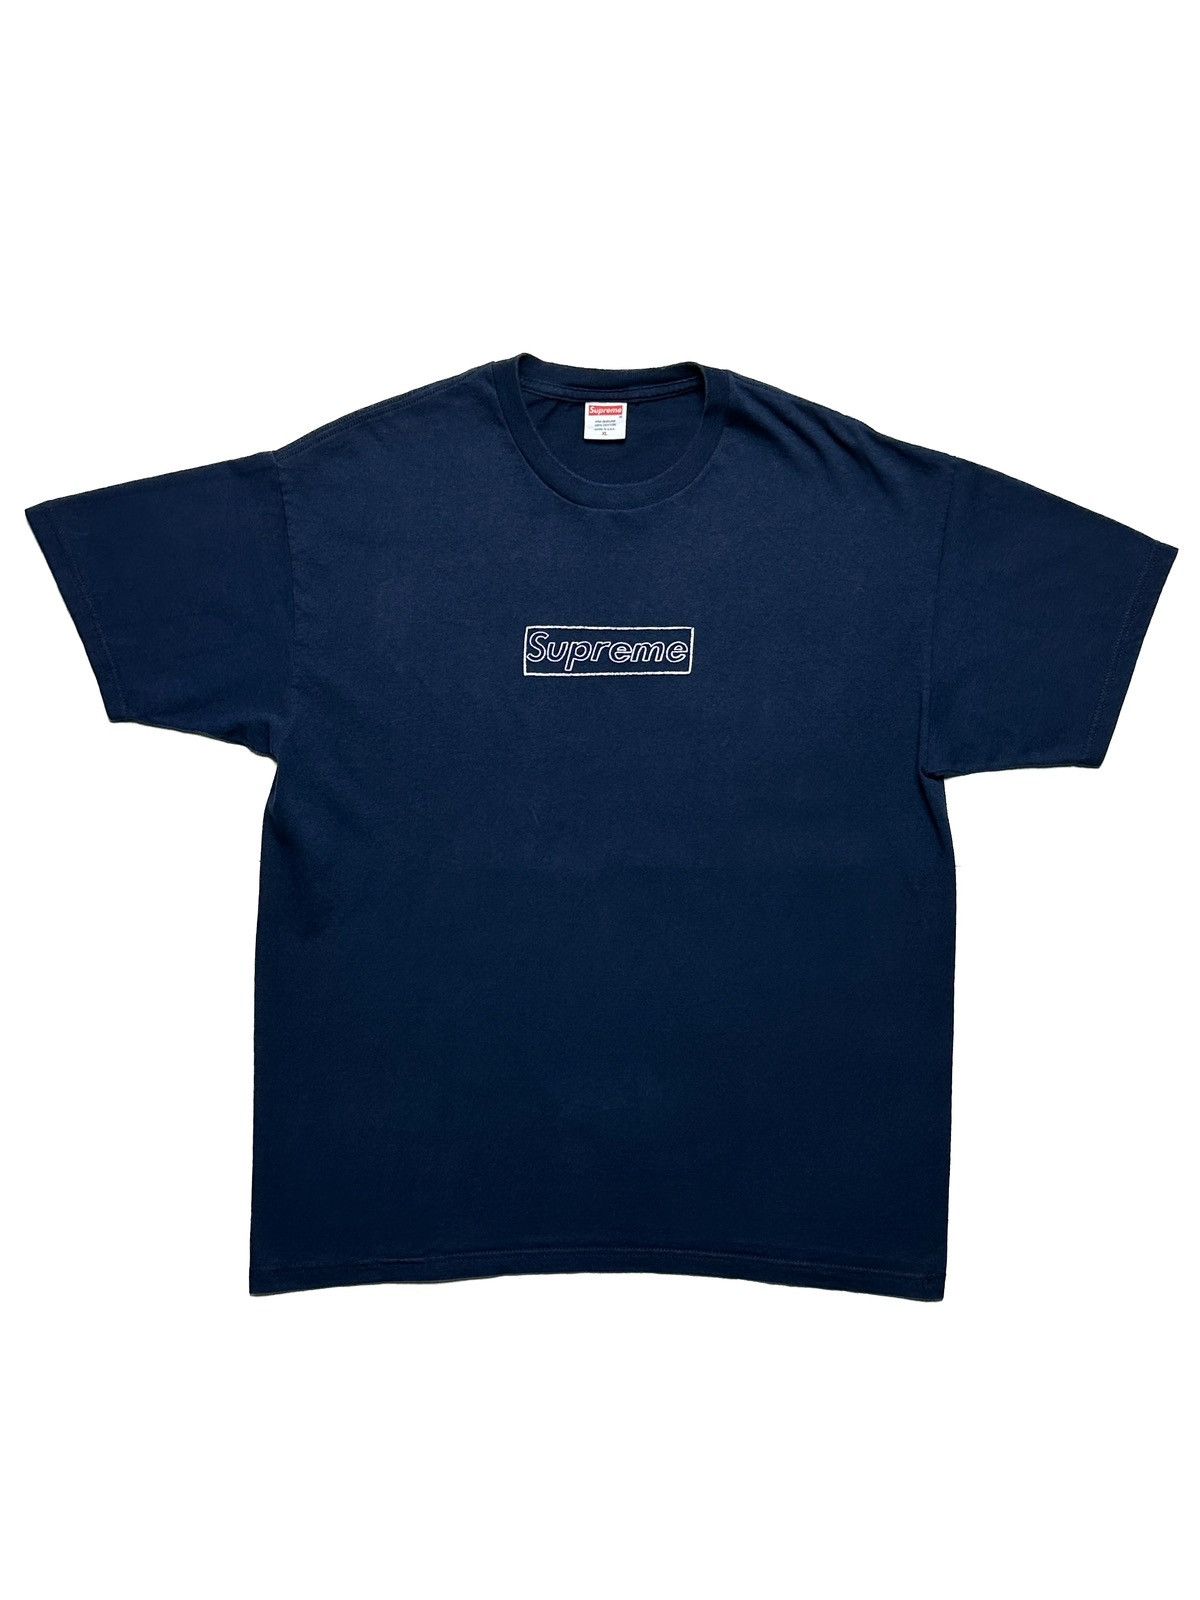 Supreme 2011 Supreme Kaws Box Logo T-Shirt | Grailed